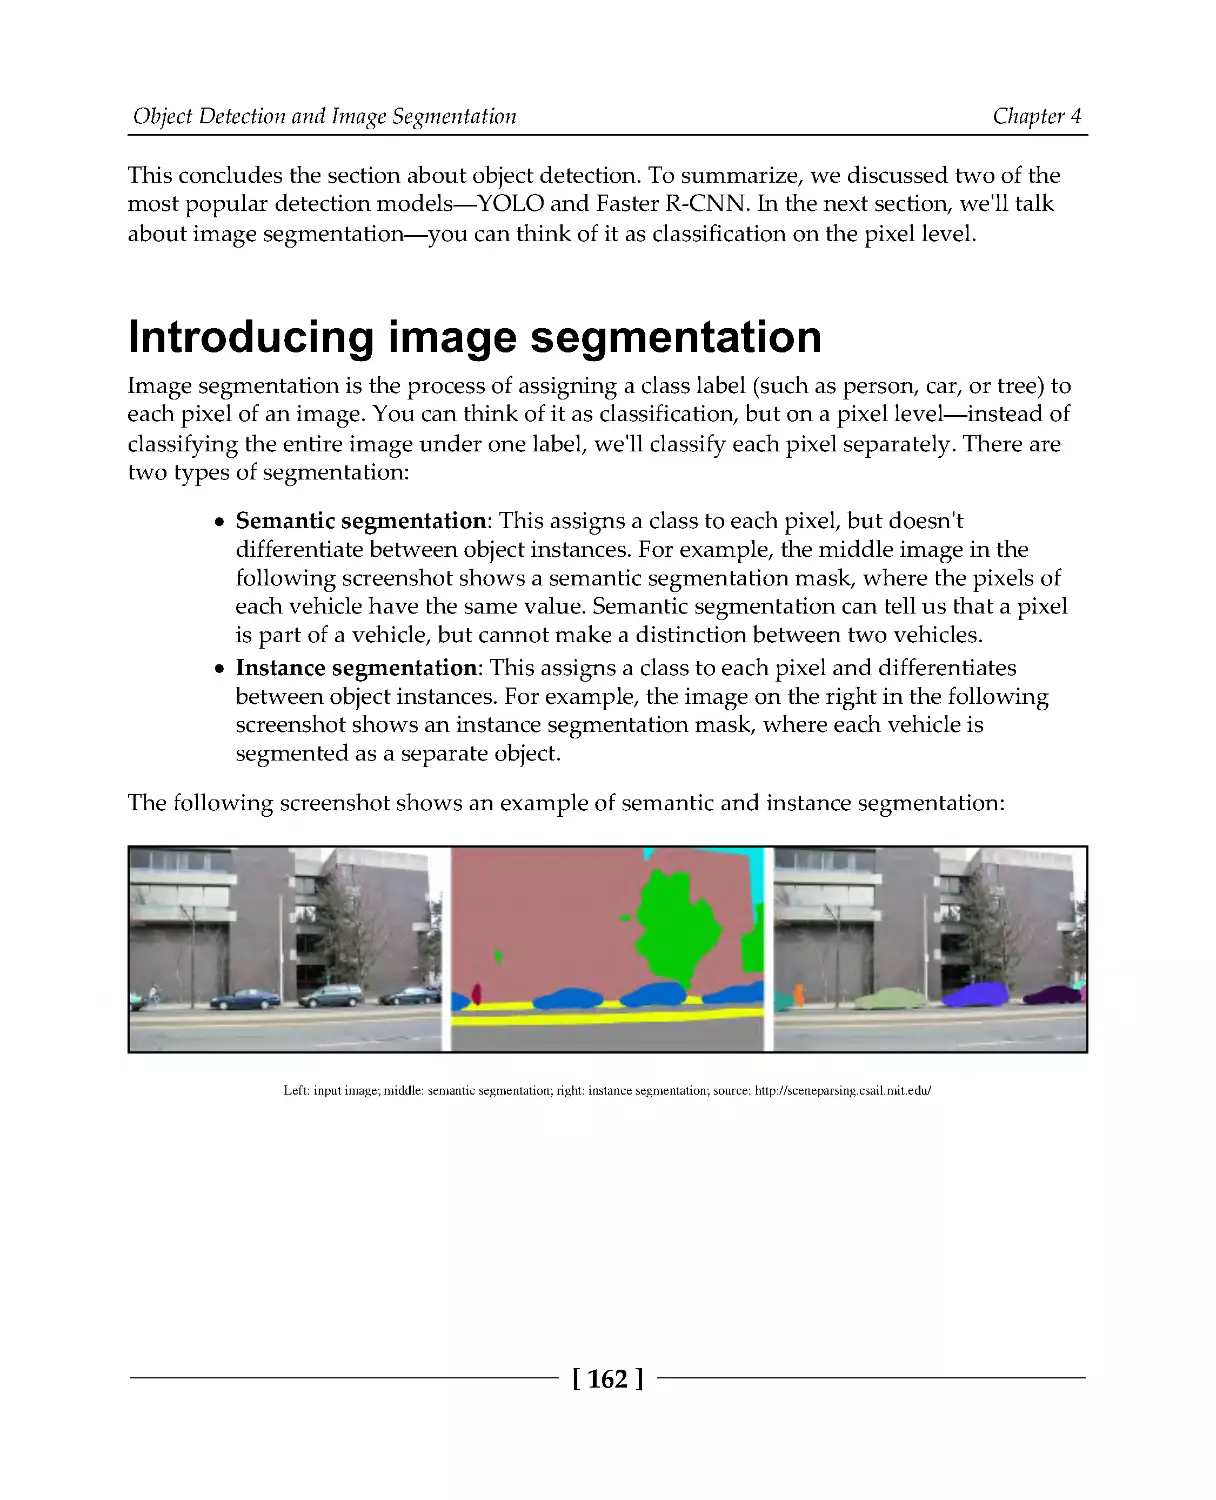 Introducing image segmentation